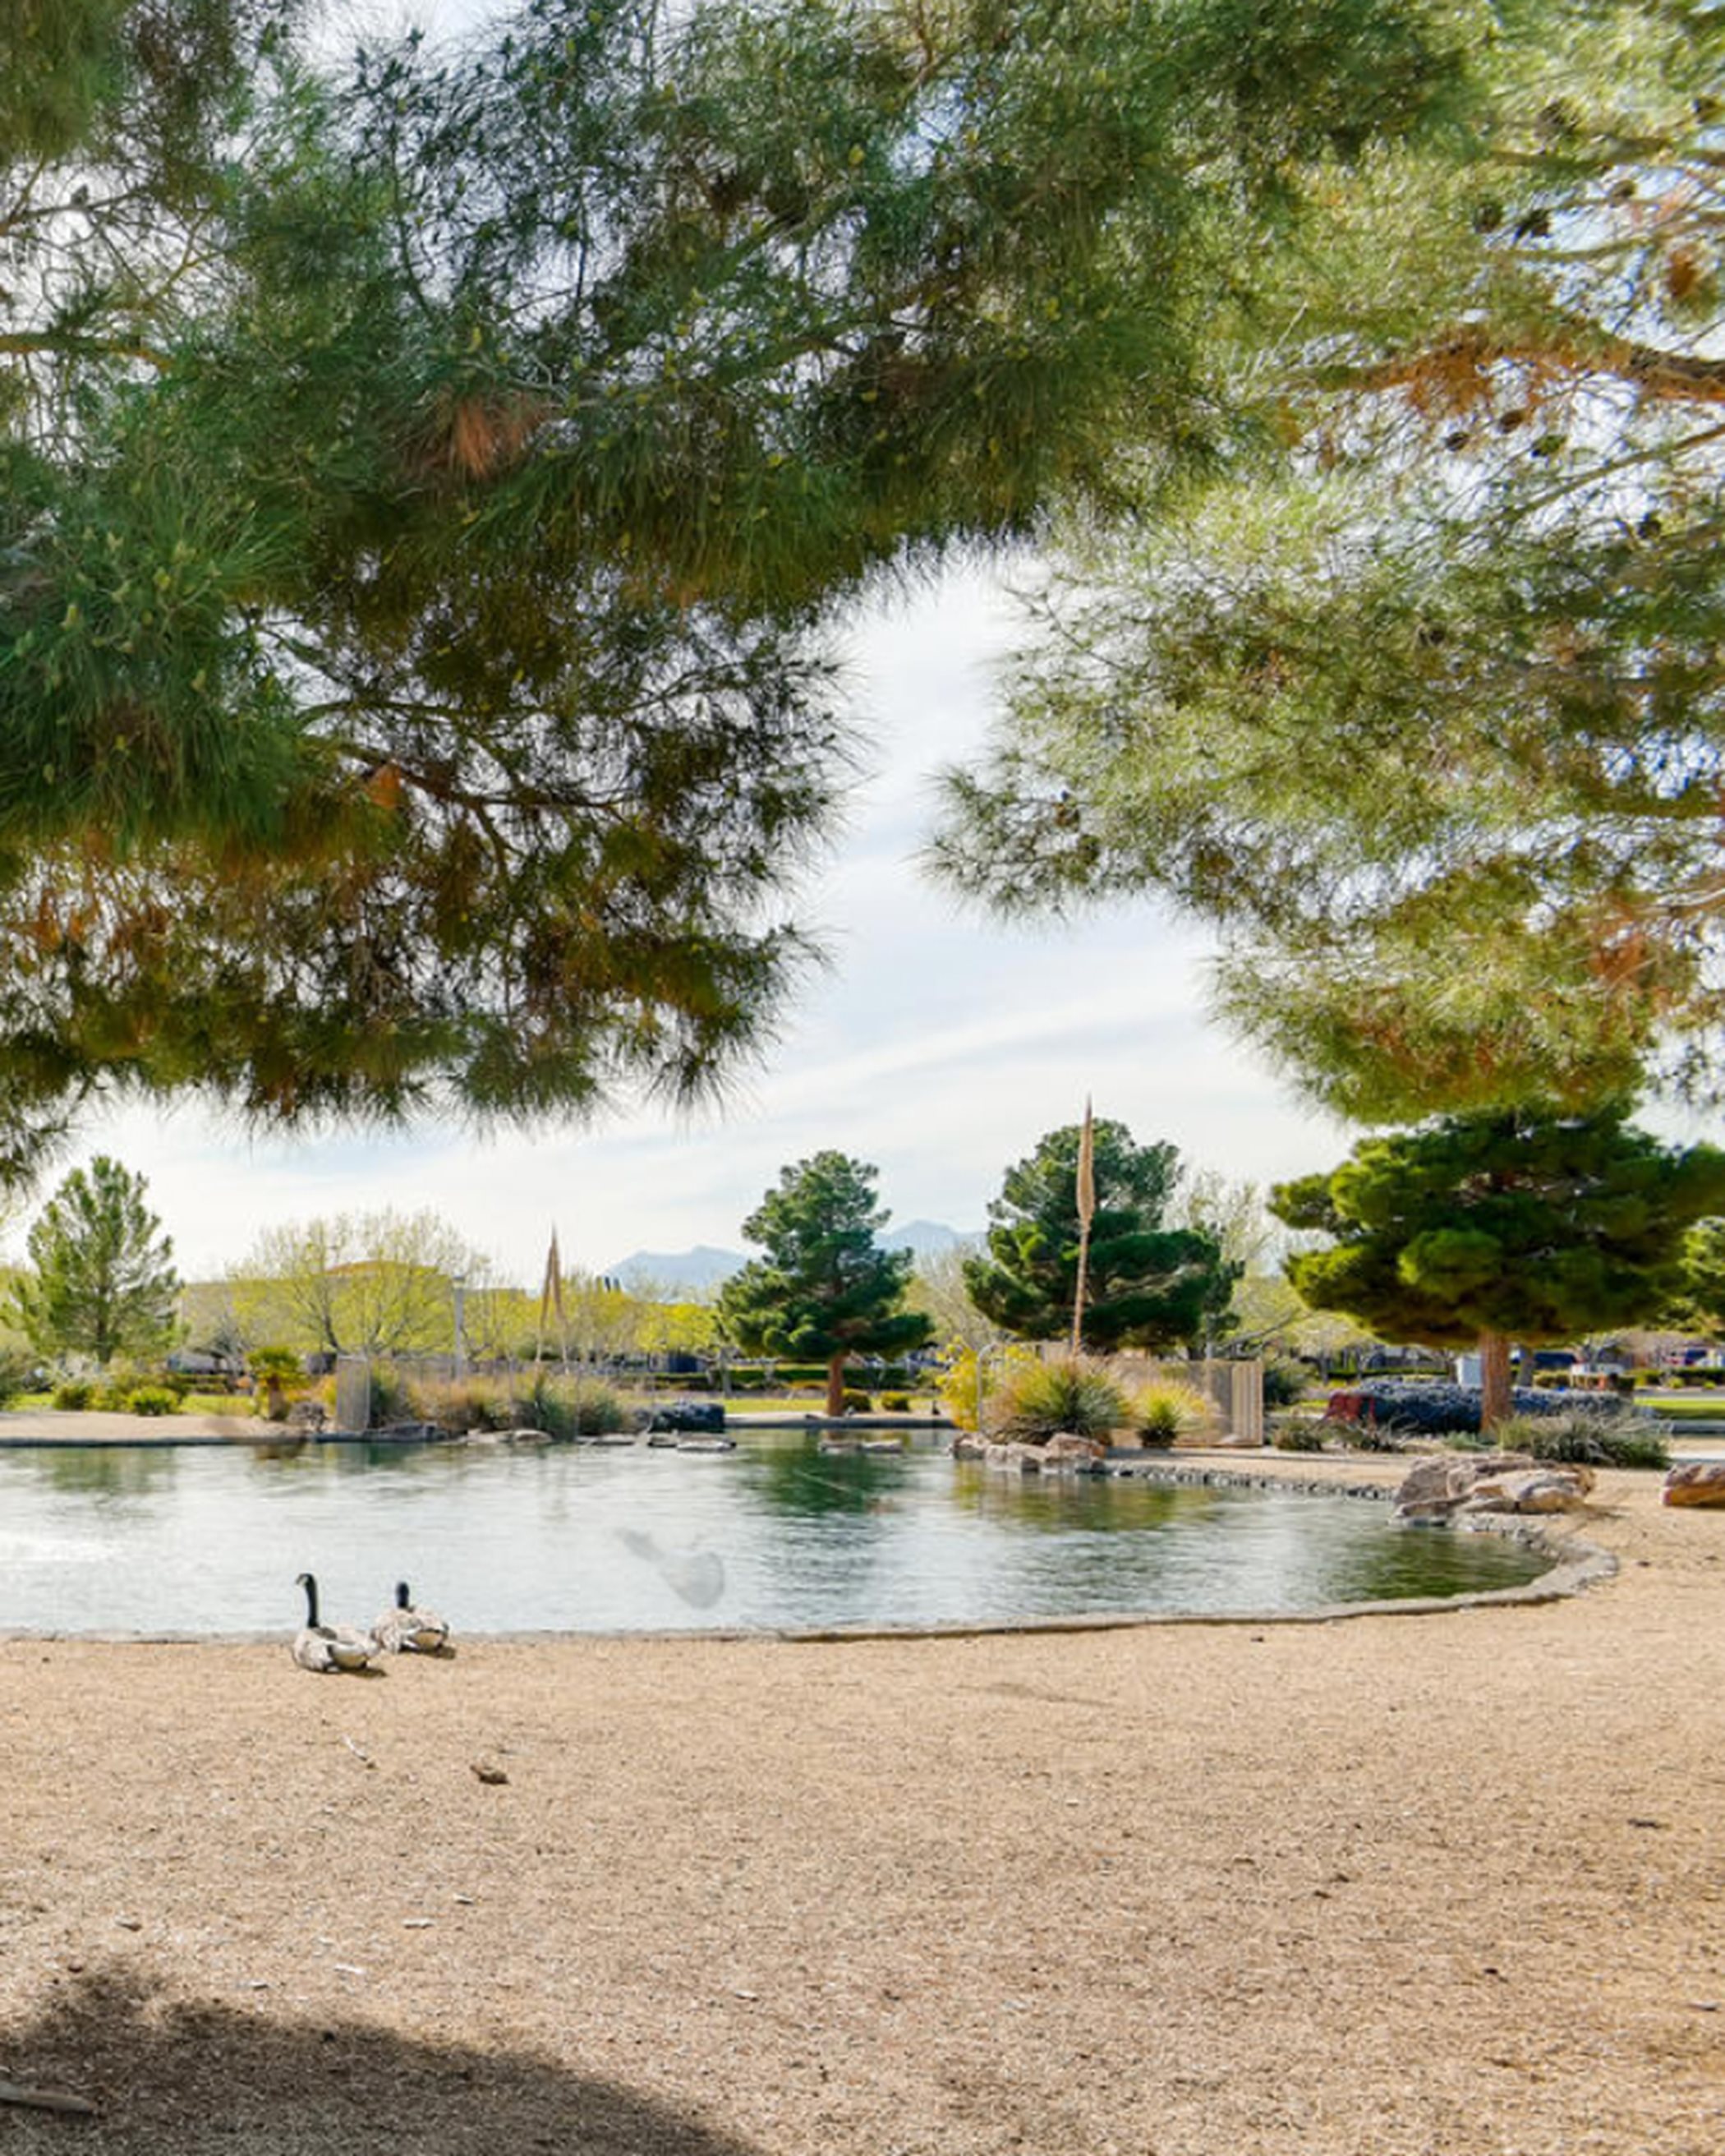 Aliante Nature Park community pond with ducks